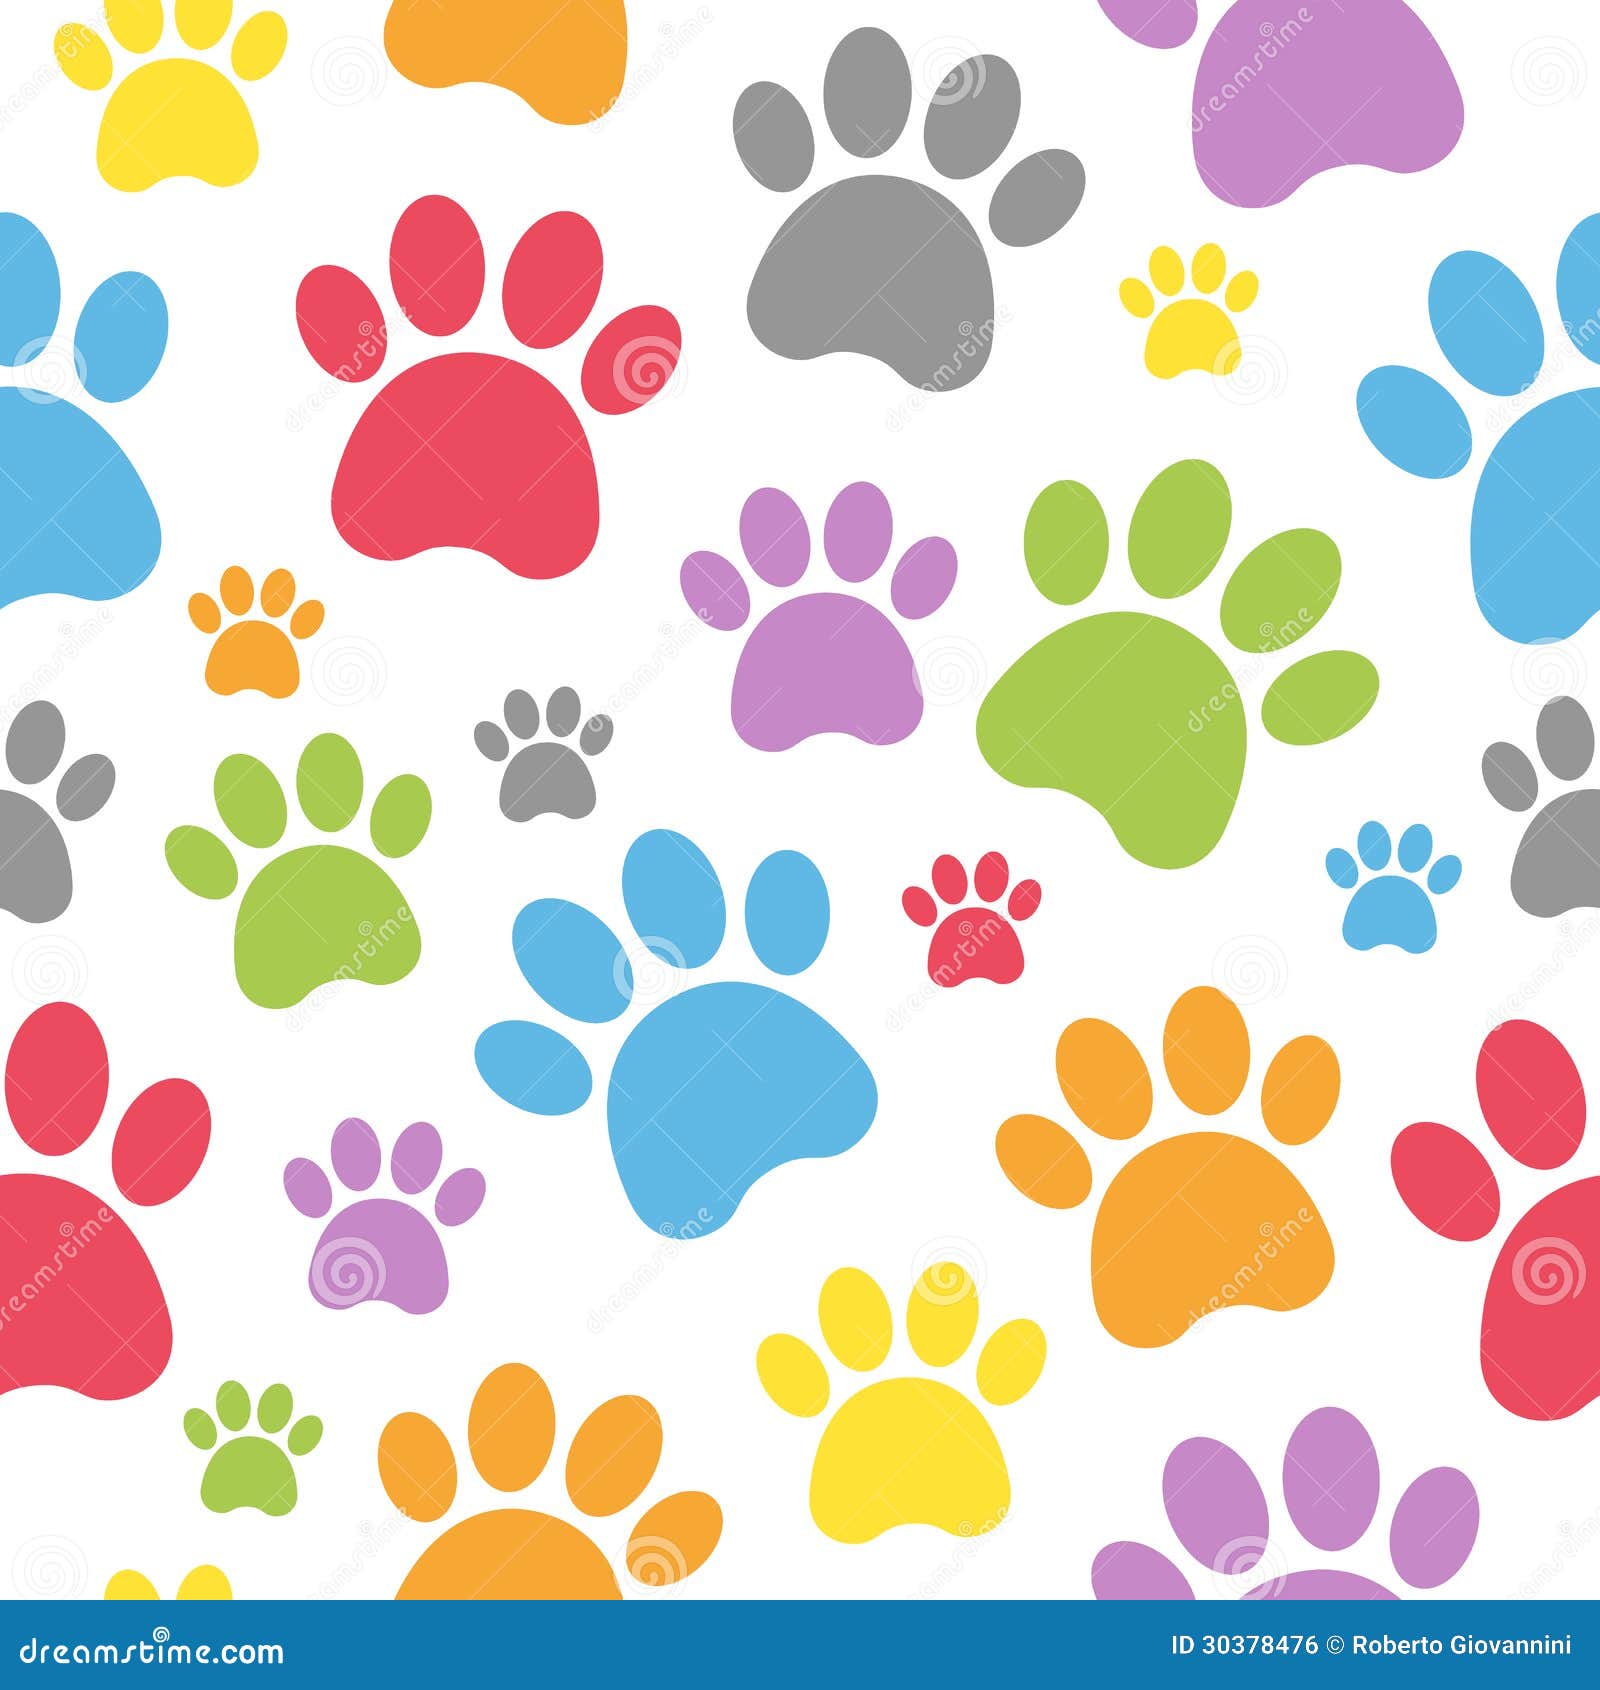 Dog Footprints Seamless Pattern Royalty Free Stock Image - Image: 30378476